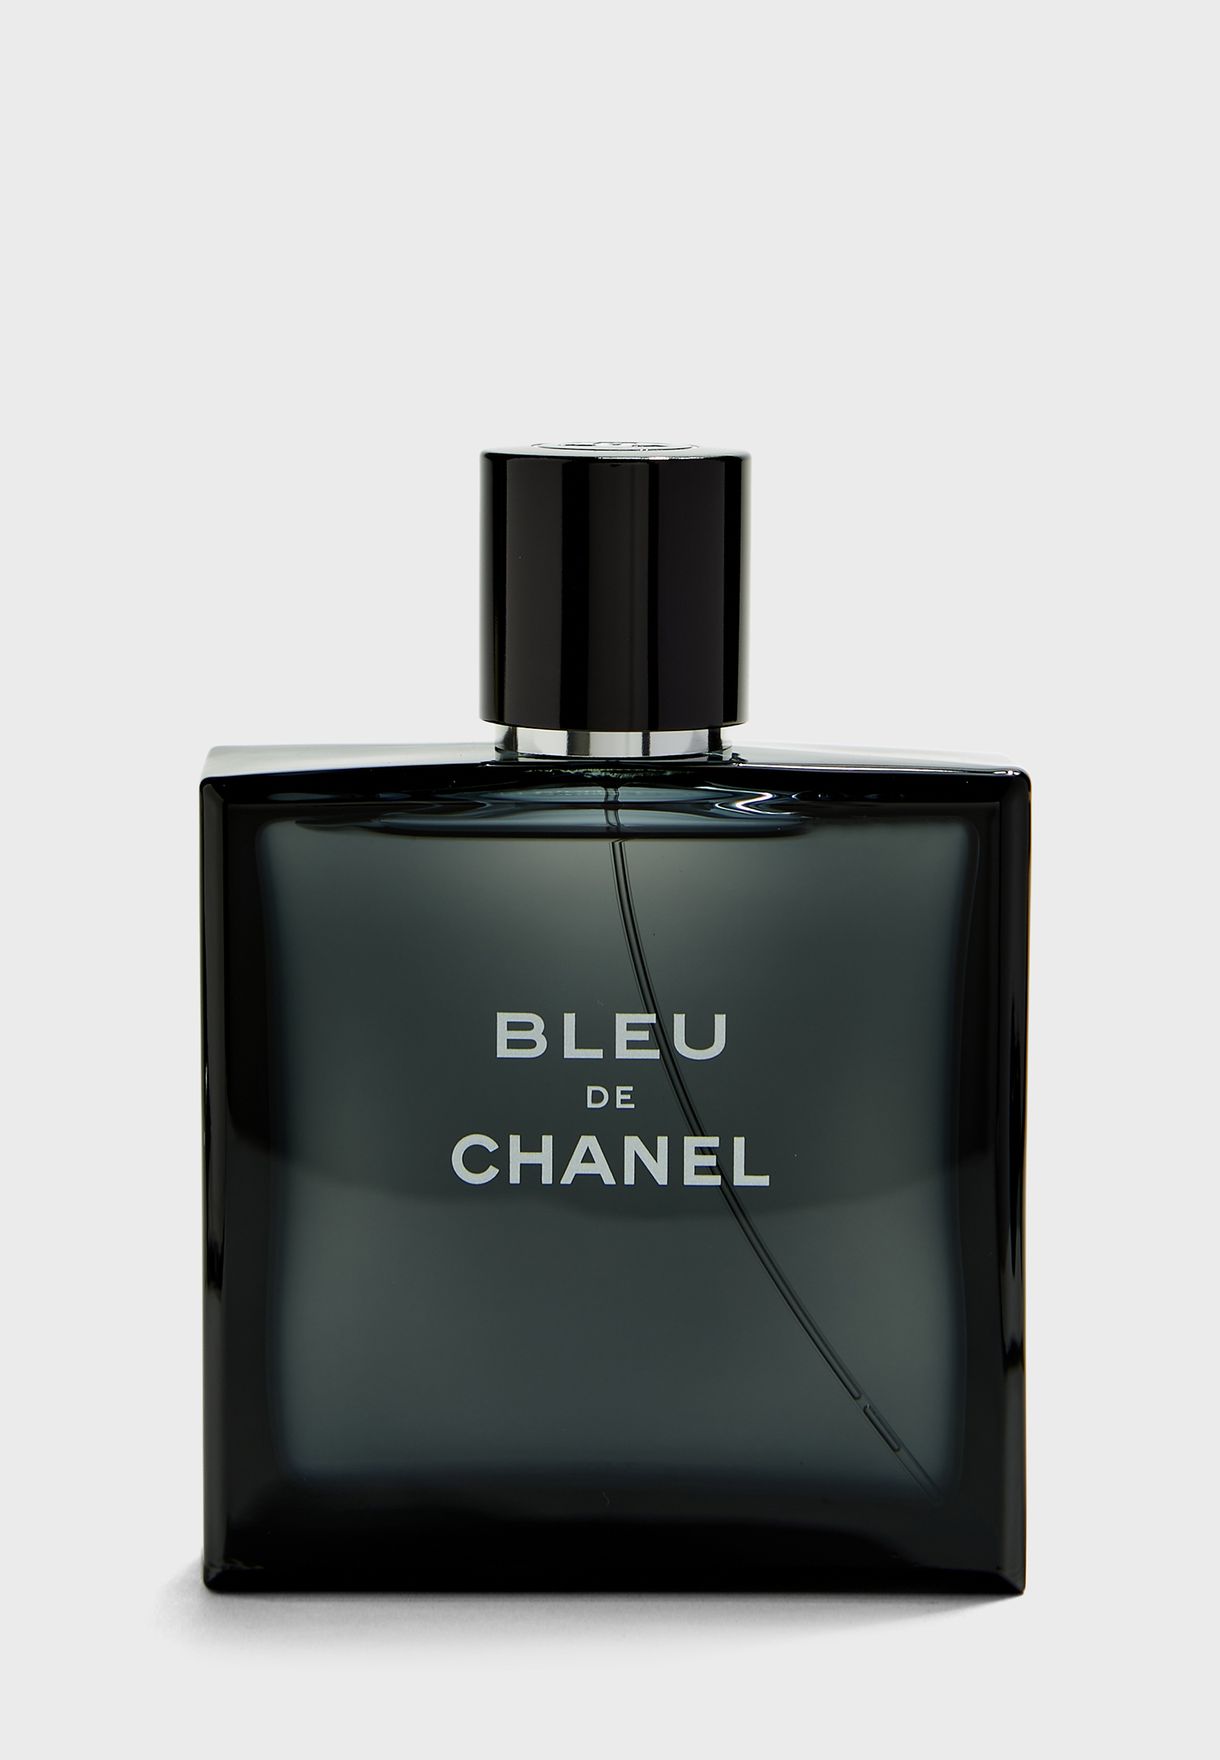 Blu de. Chanel bleu de Chanel (m) EDP 100ml. Blue de Chanel мужские EDP. Chanel bleu de Chanel Parfum Vapo men 50ml. Bleu de Chanel мужские 50ml.